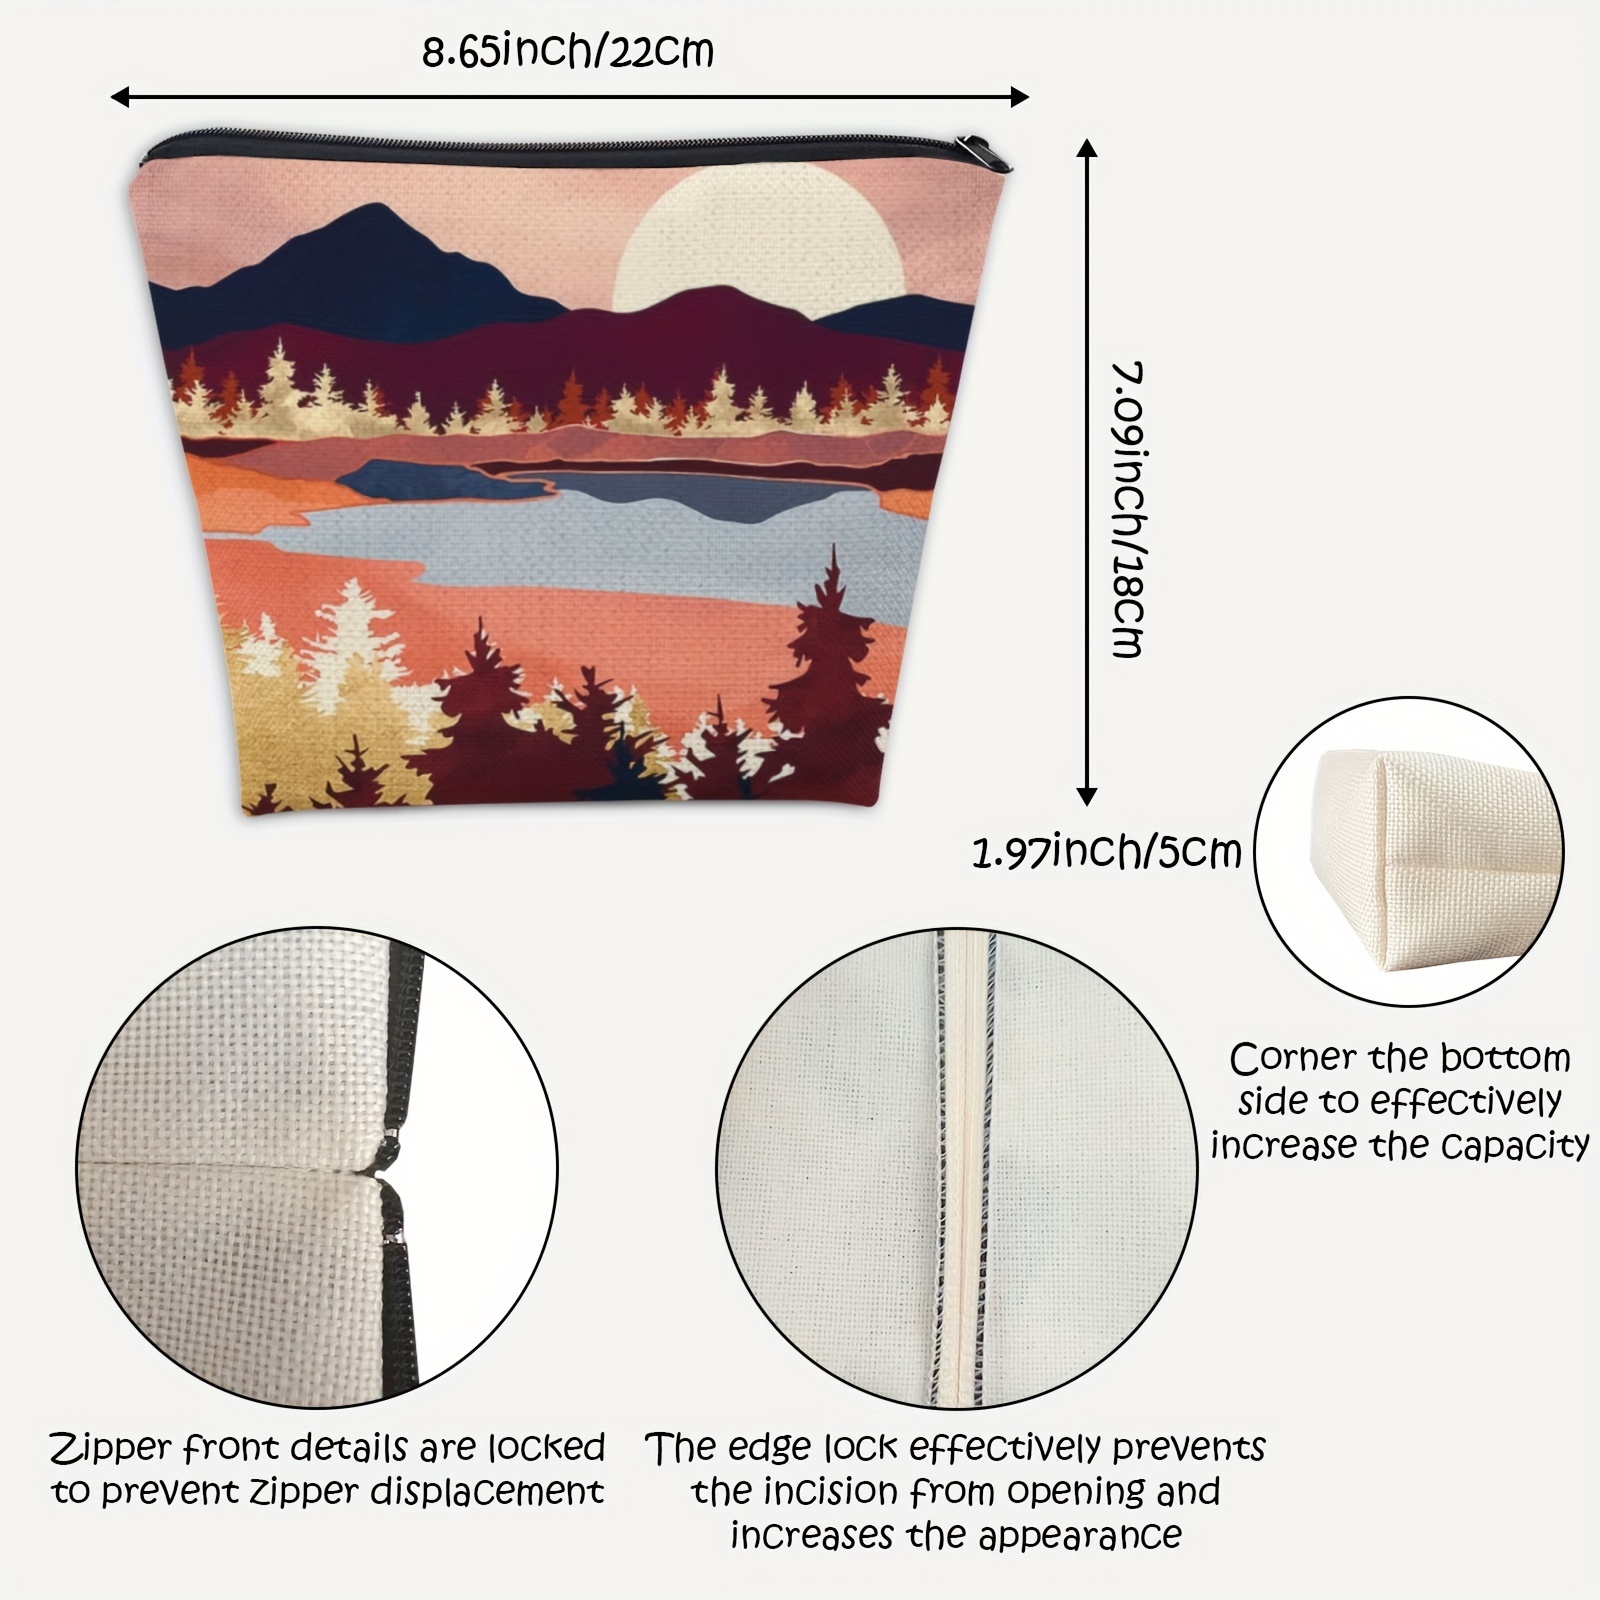 Mountain Sun Print Makeup Bag Cute Toiletry Bag For Purse Cosmetic Bag For  Women Girls Gift Zipper Travel Toiletry Pouch